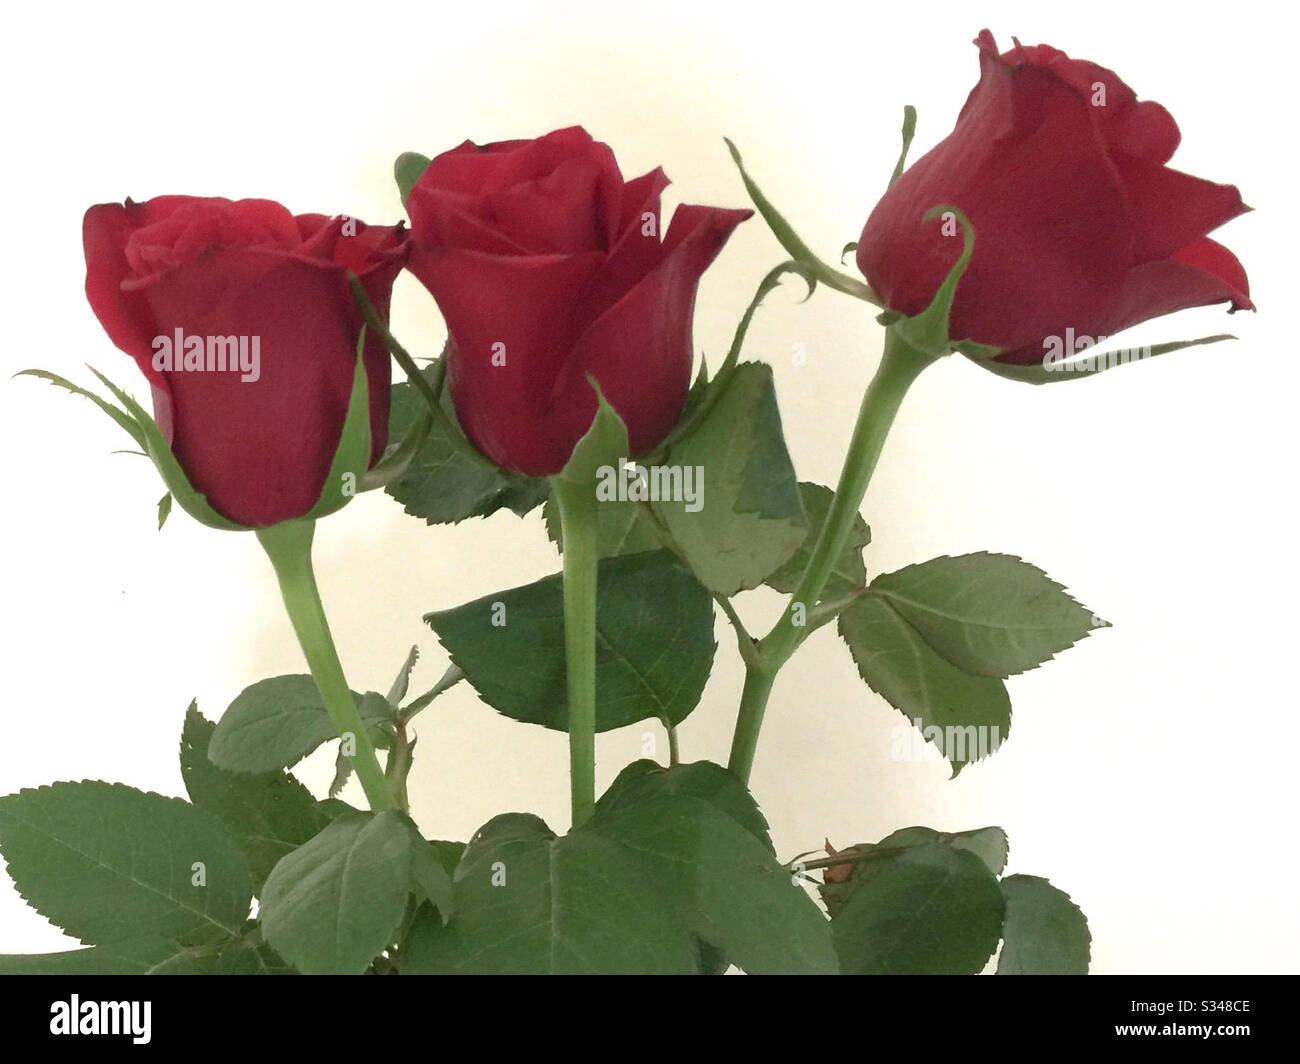 3 lovely red roses on white background Stock Photo